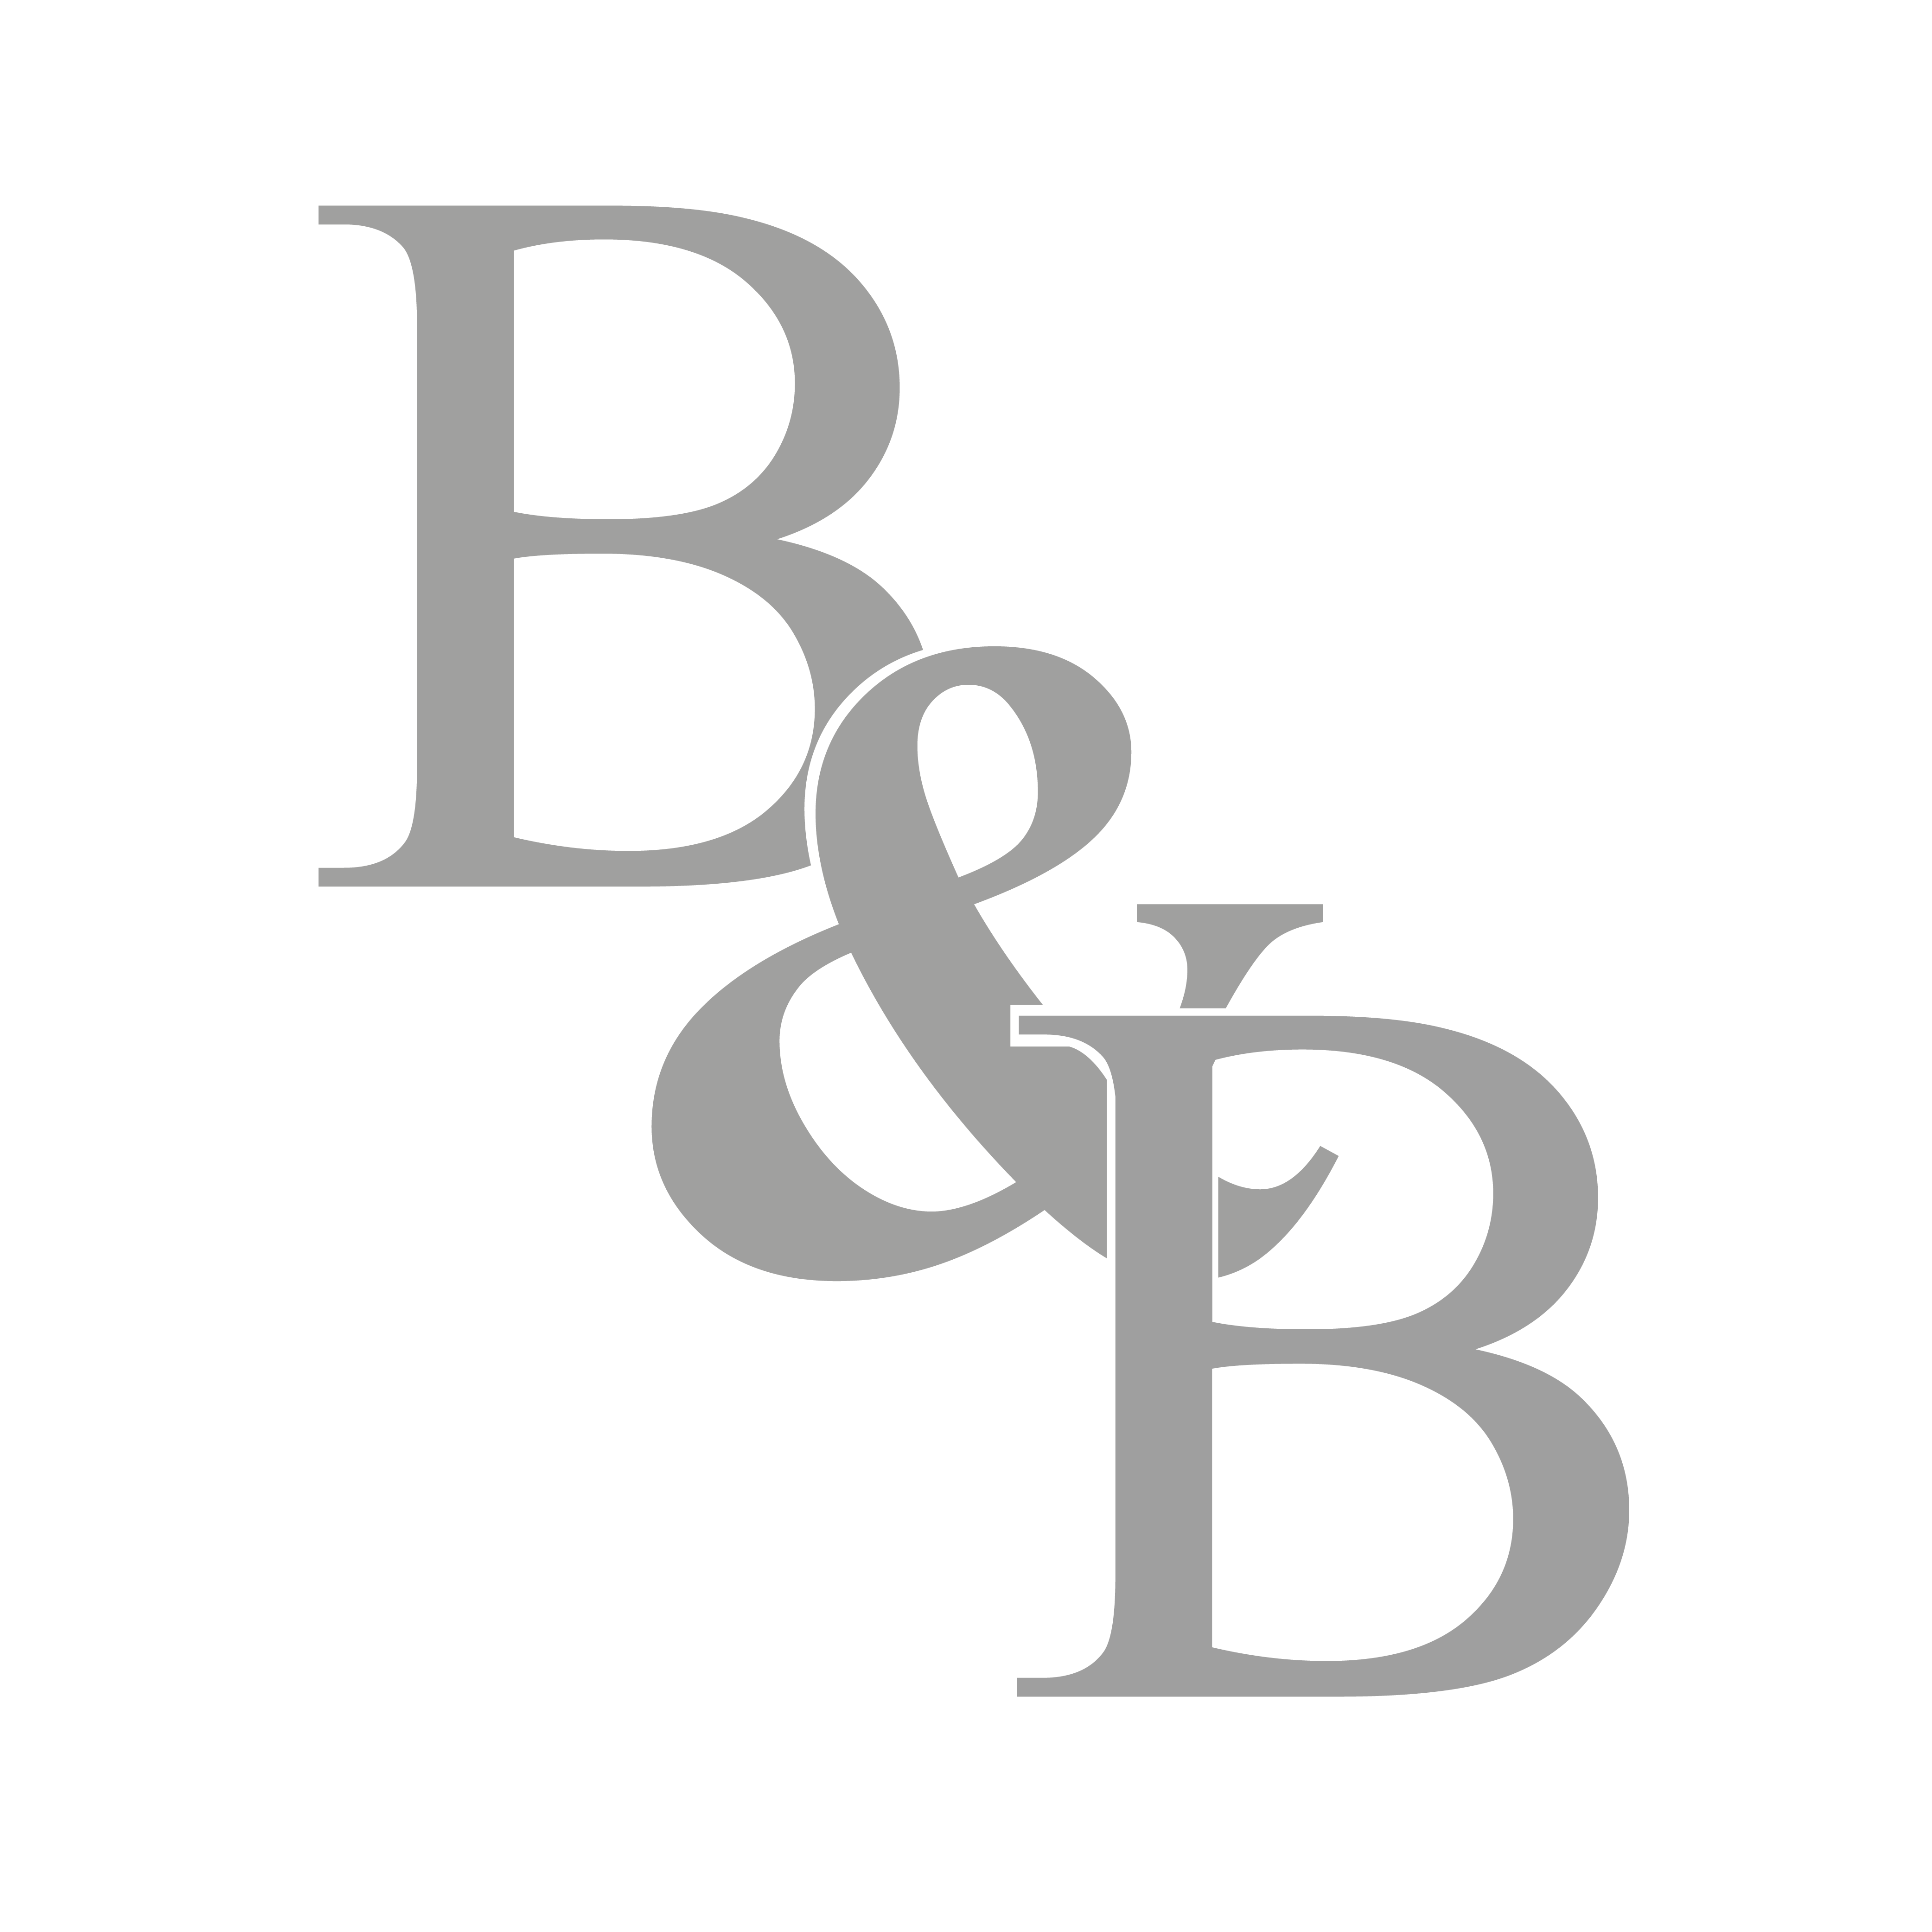 B & B Construction's Logo